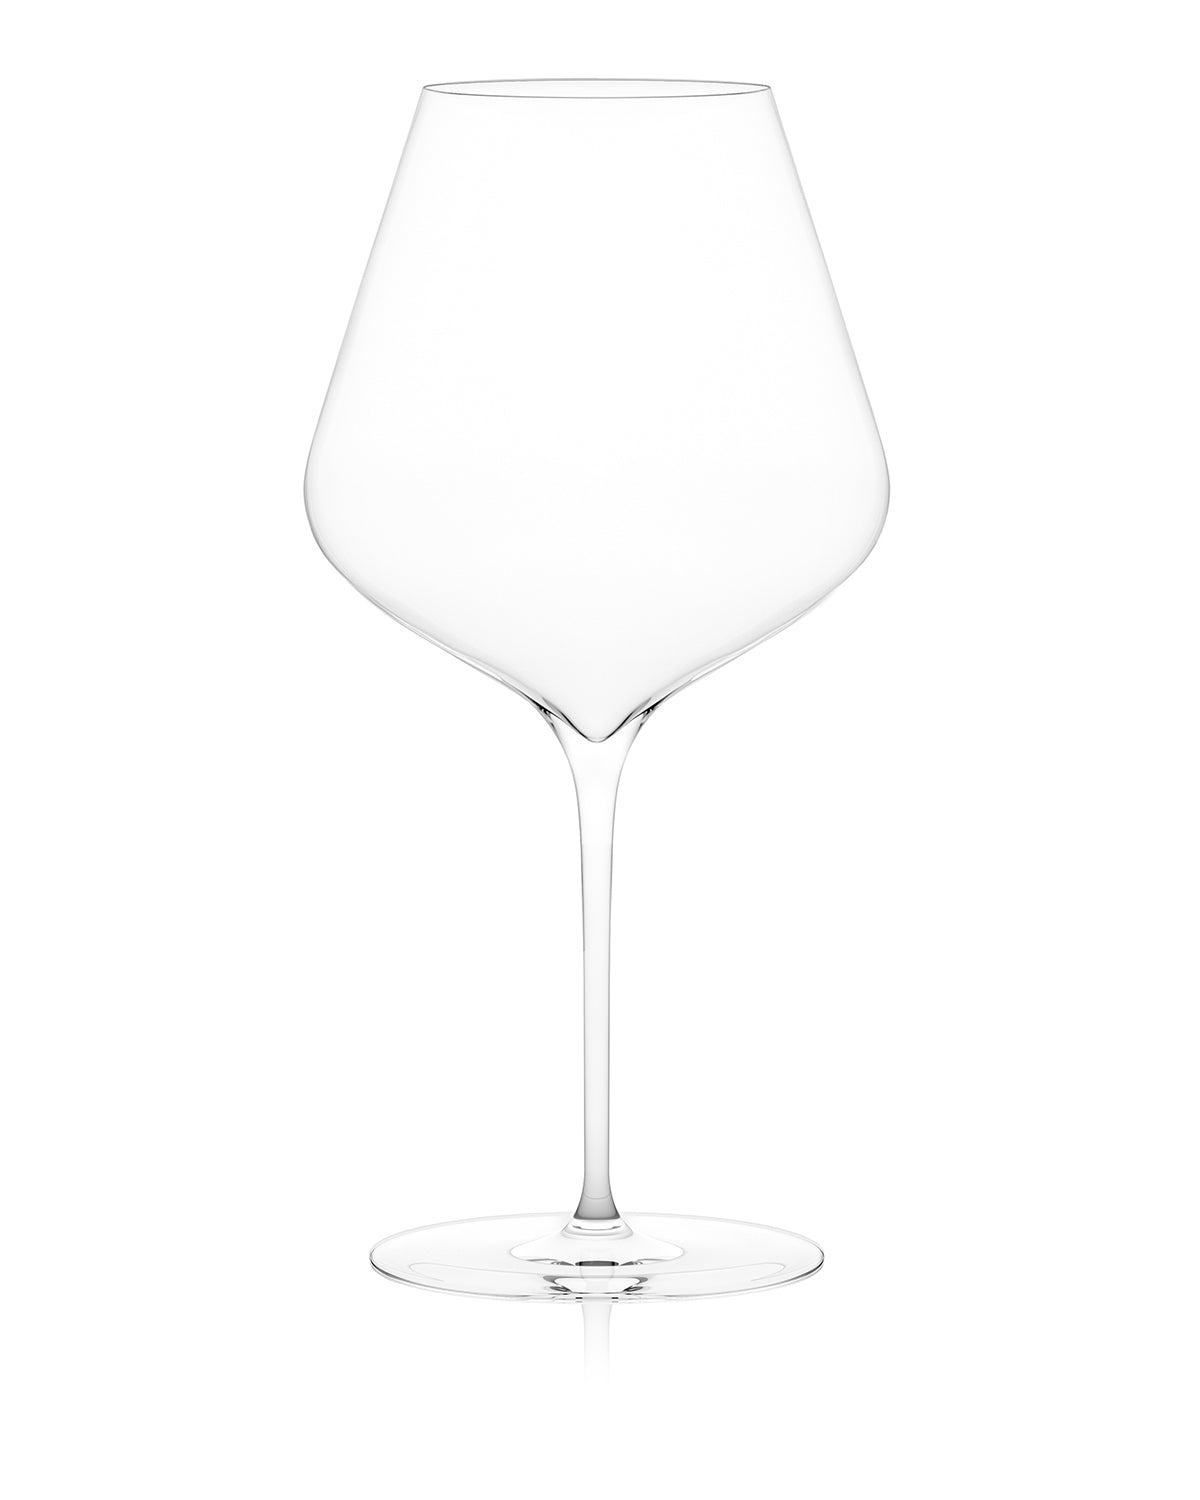 Plumm Three No. 3 European Crystal Wine Glass - Master Carton (800ml) - 8 Pack